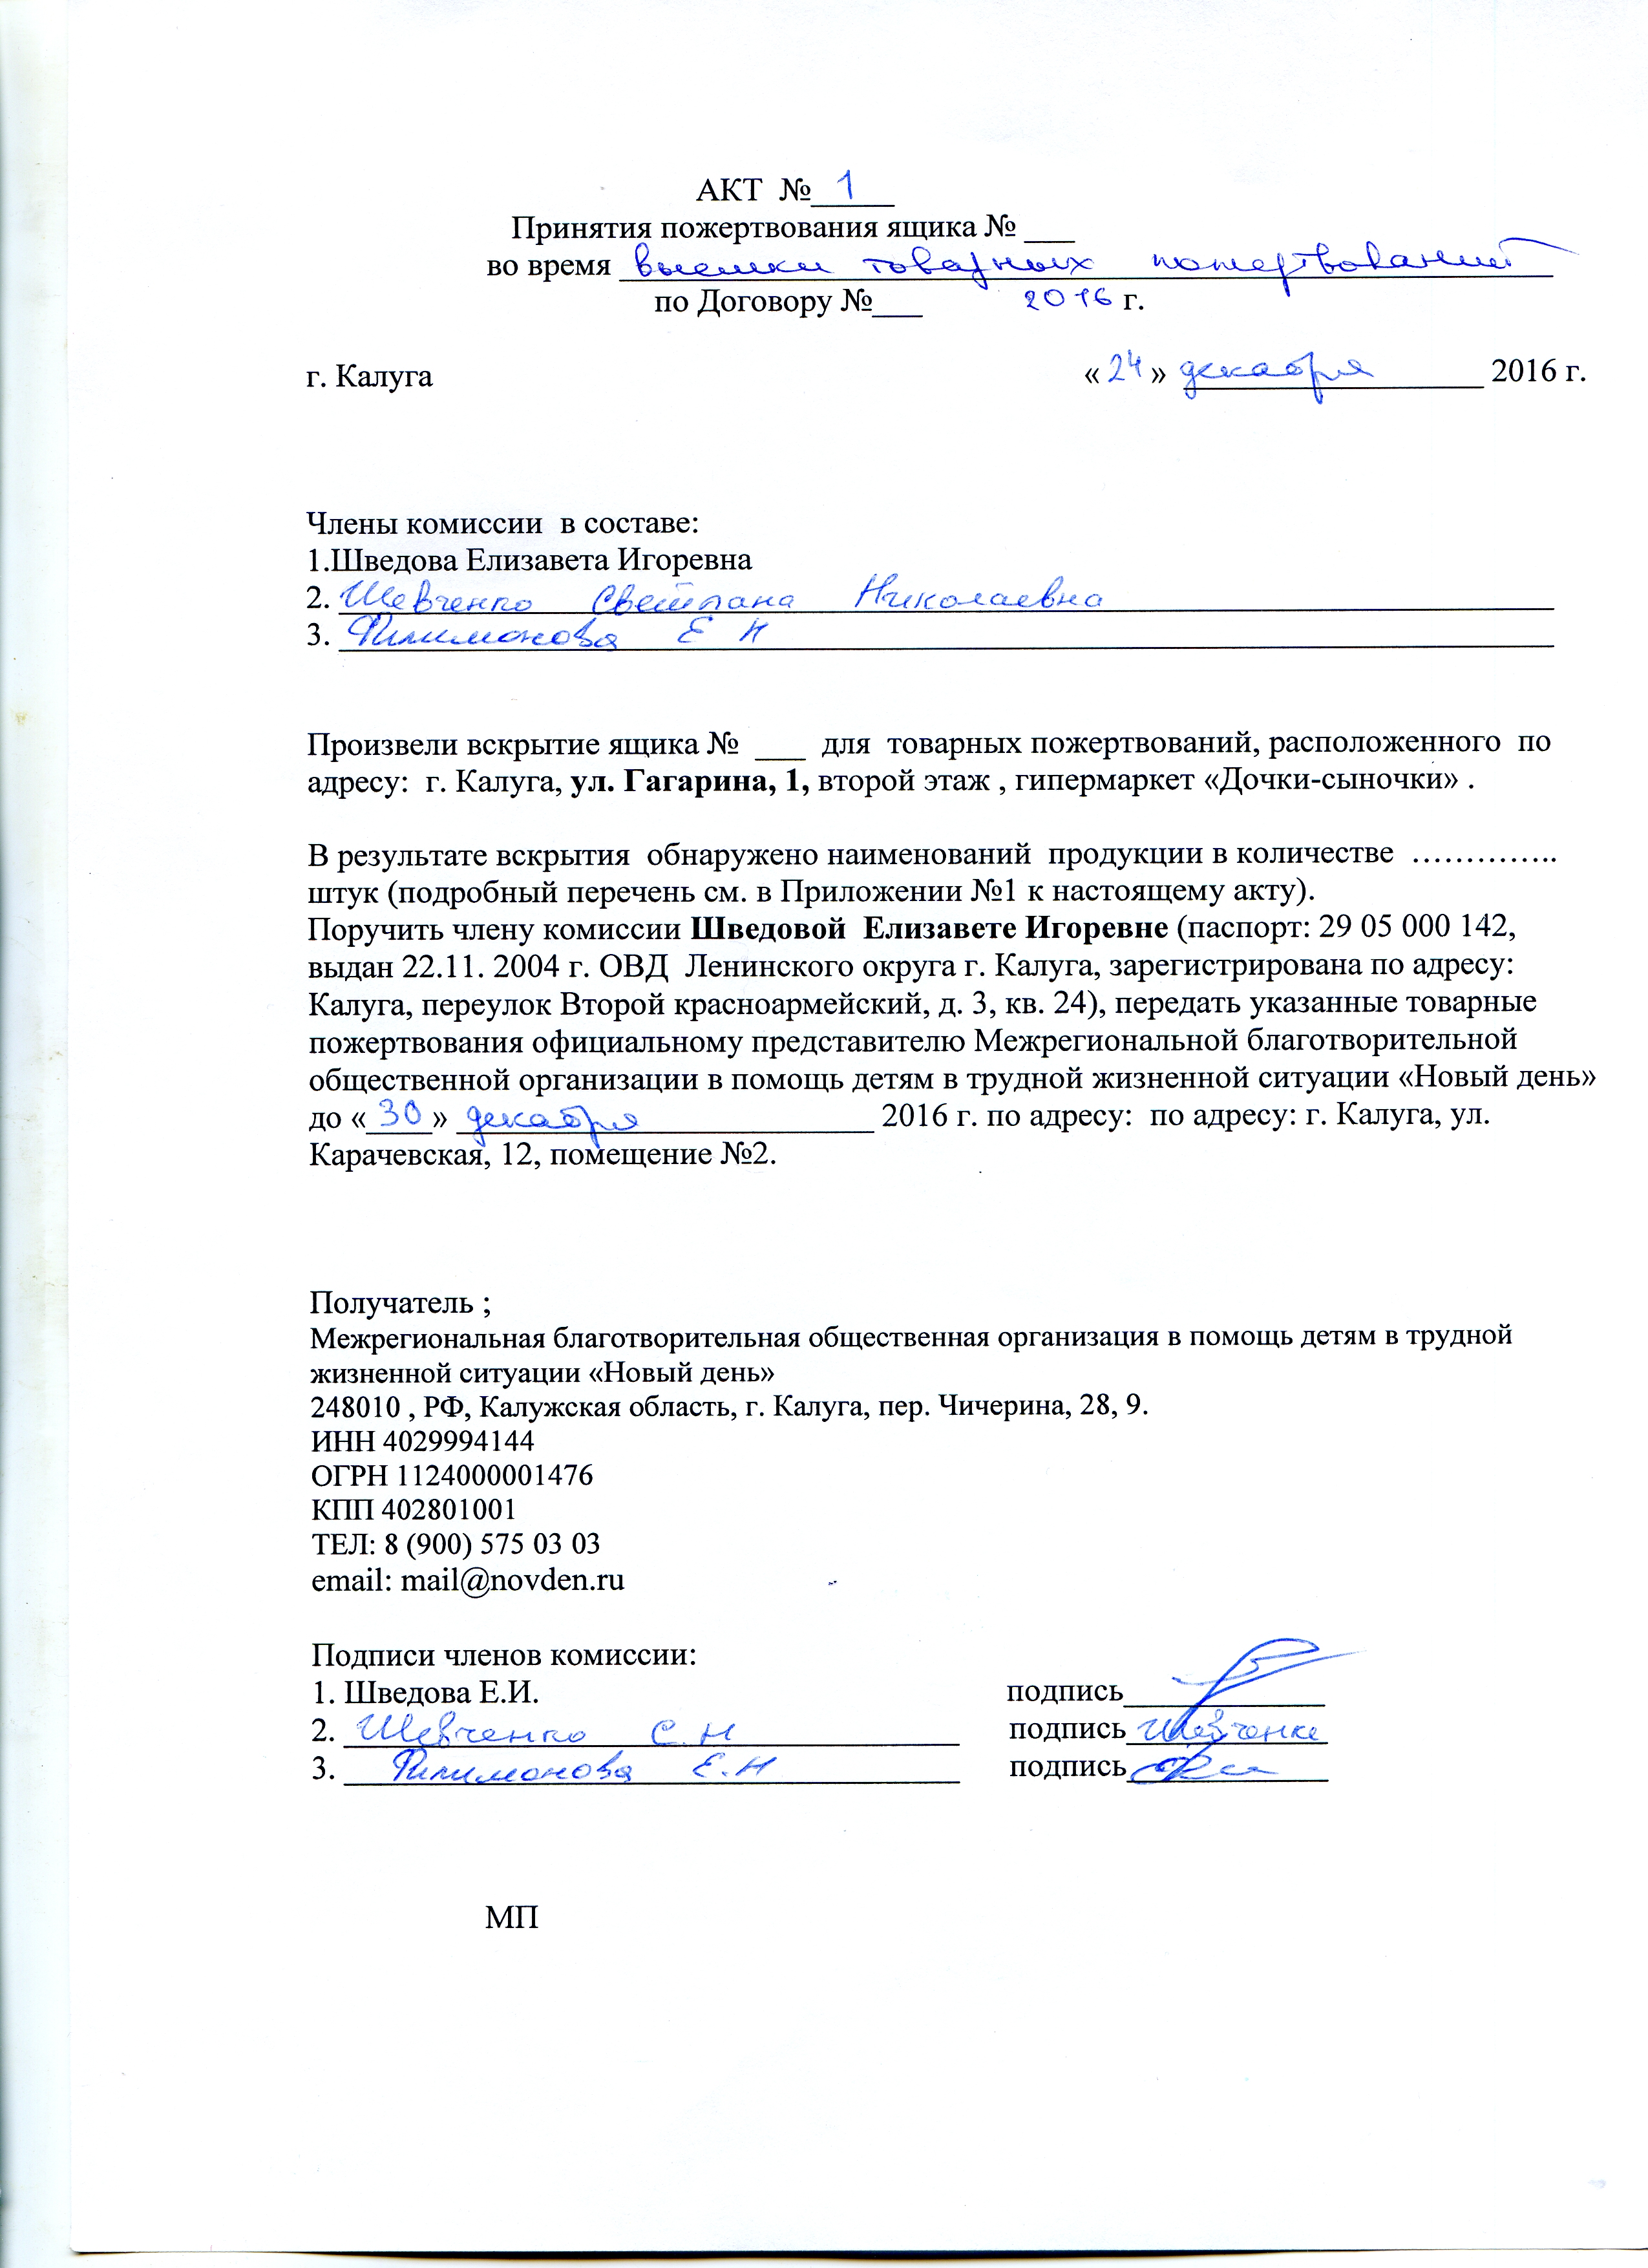 Акт 1 Гагарина 24 декабря 2016294